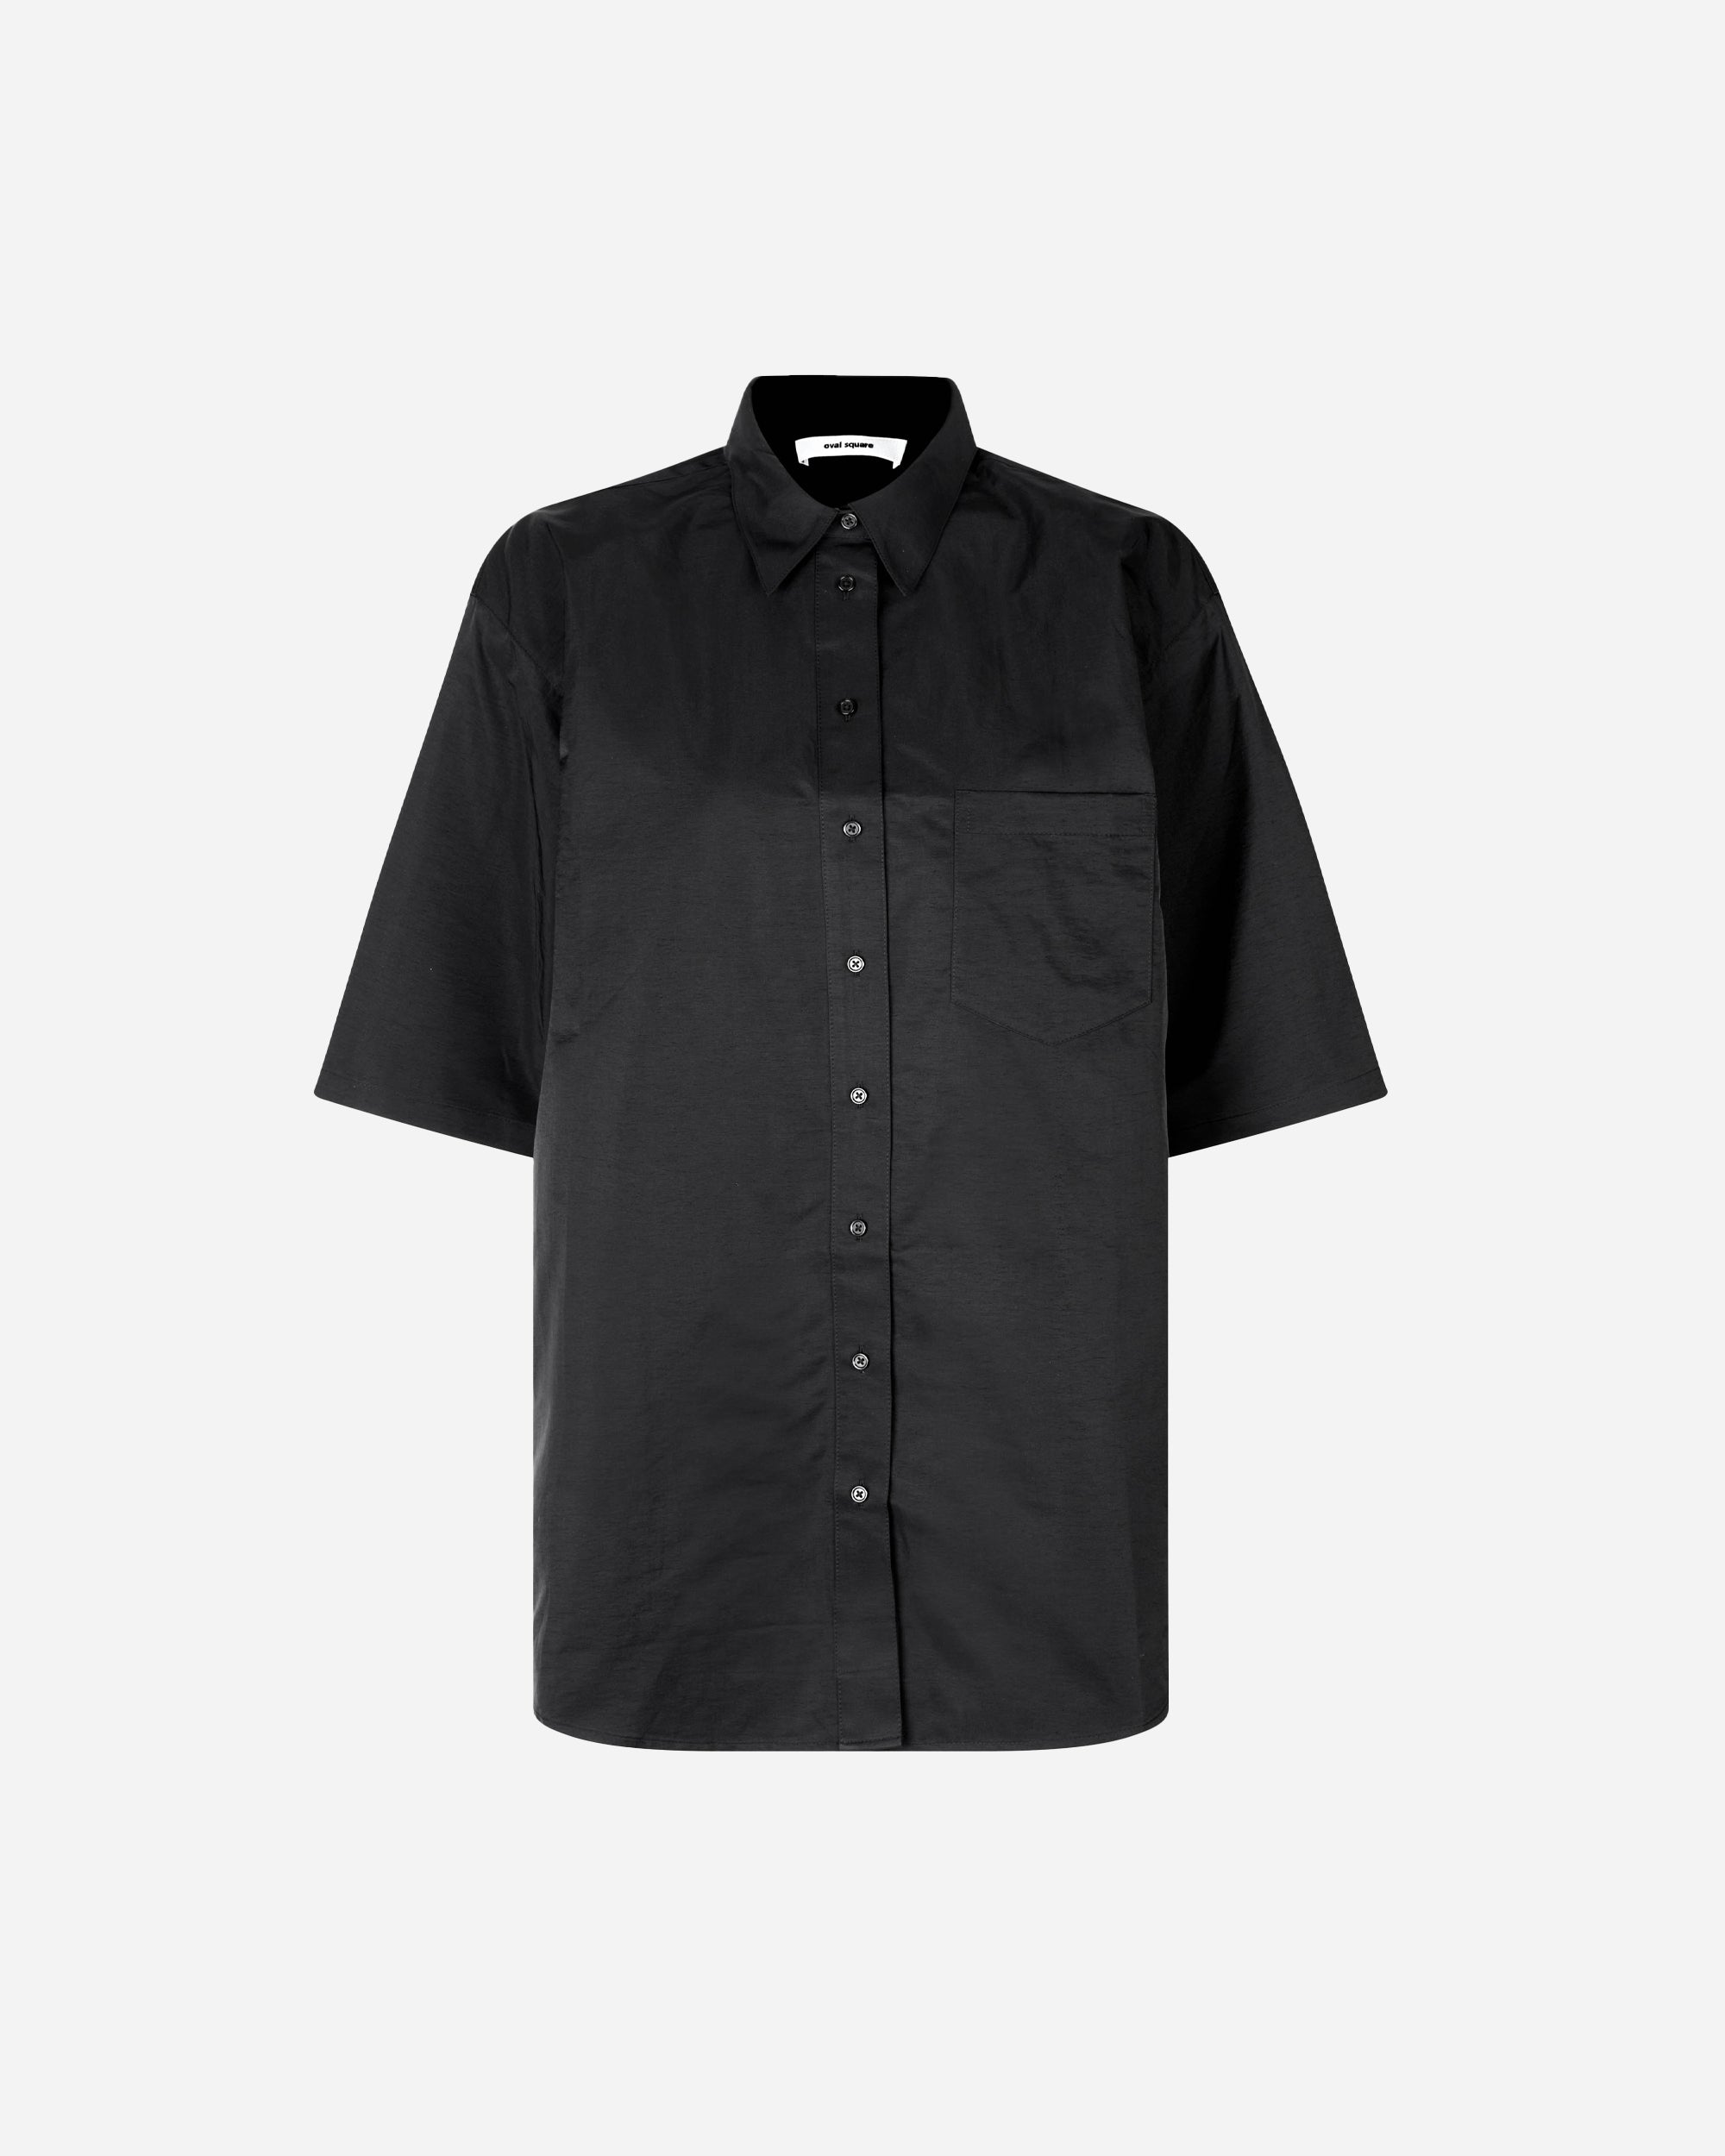 Oval Square OSWork Shirt Black  20041-8001